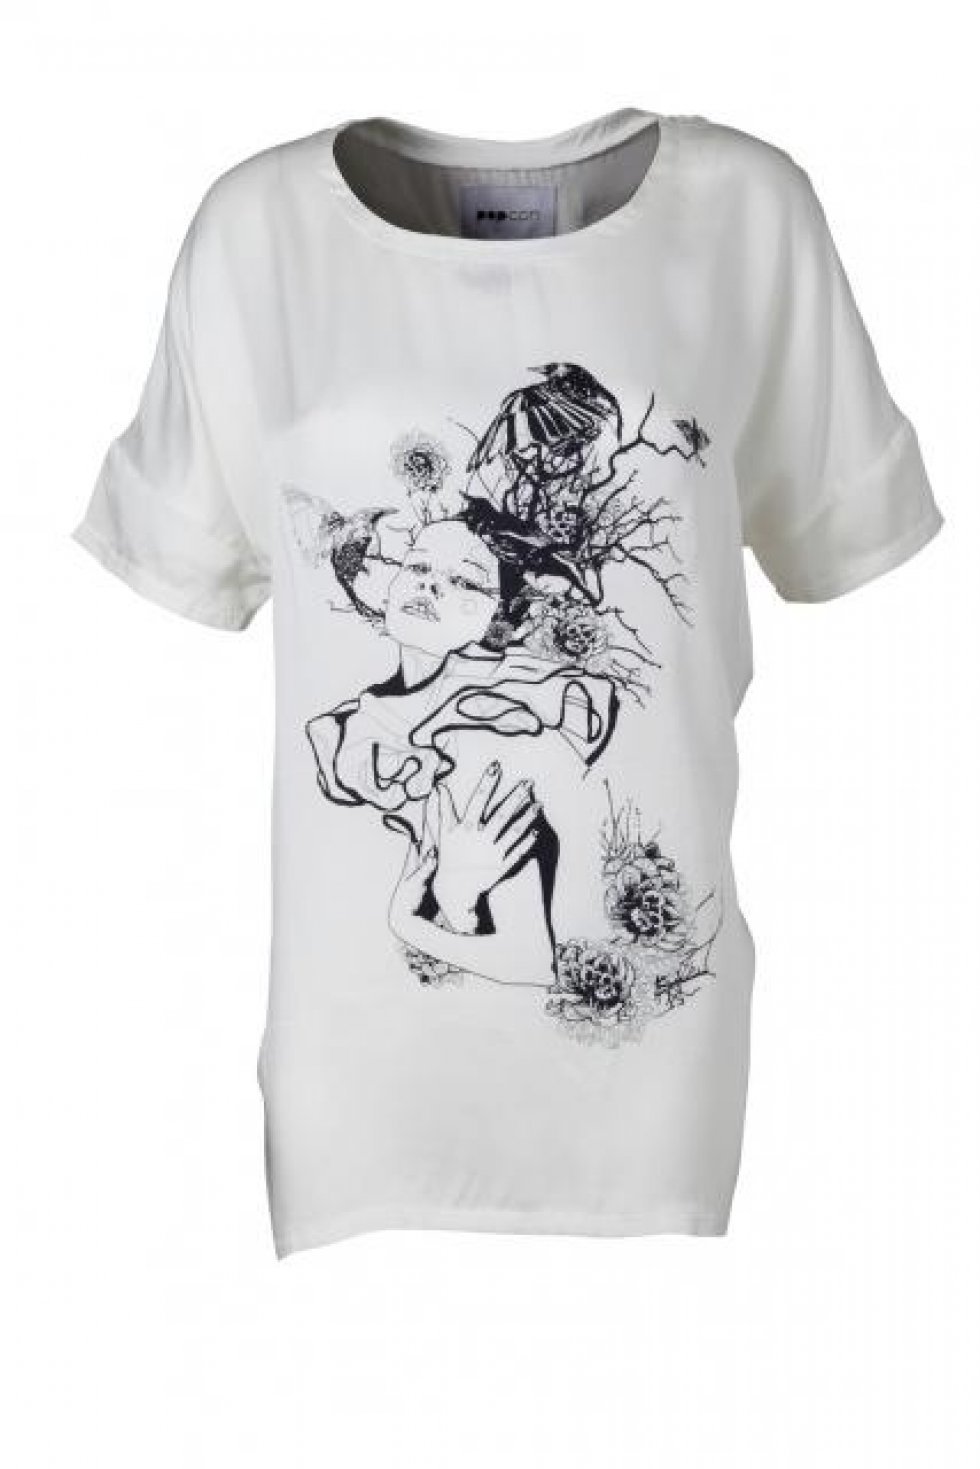 POPCph tee med print, 349 kr. - T-shirts med print